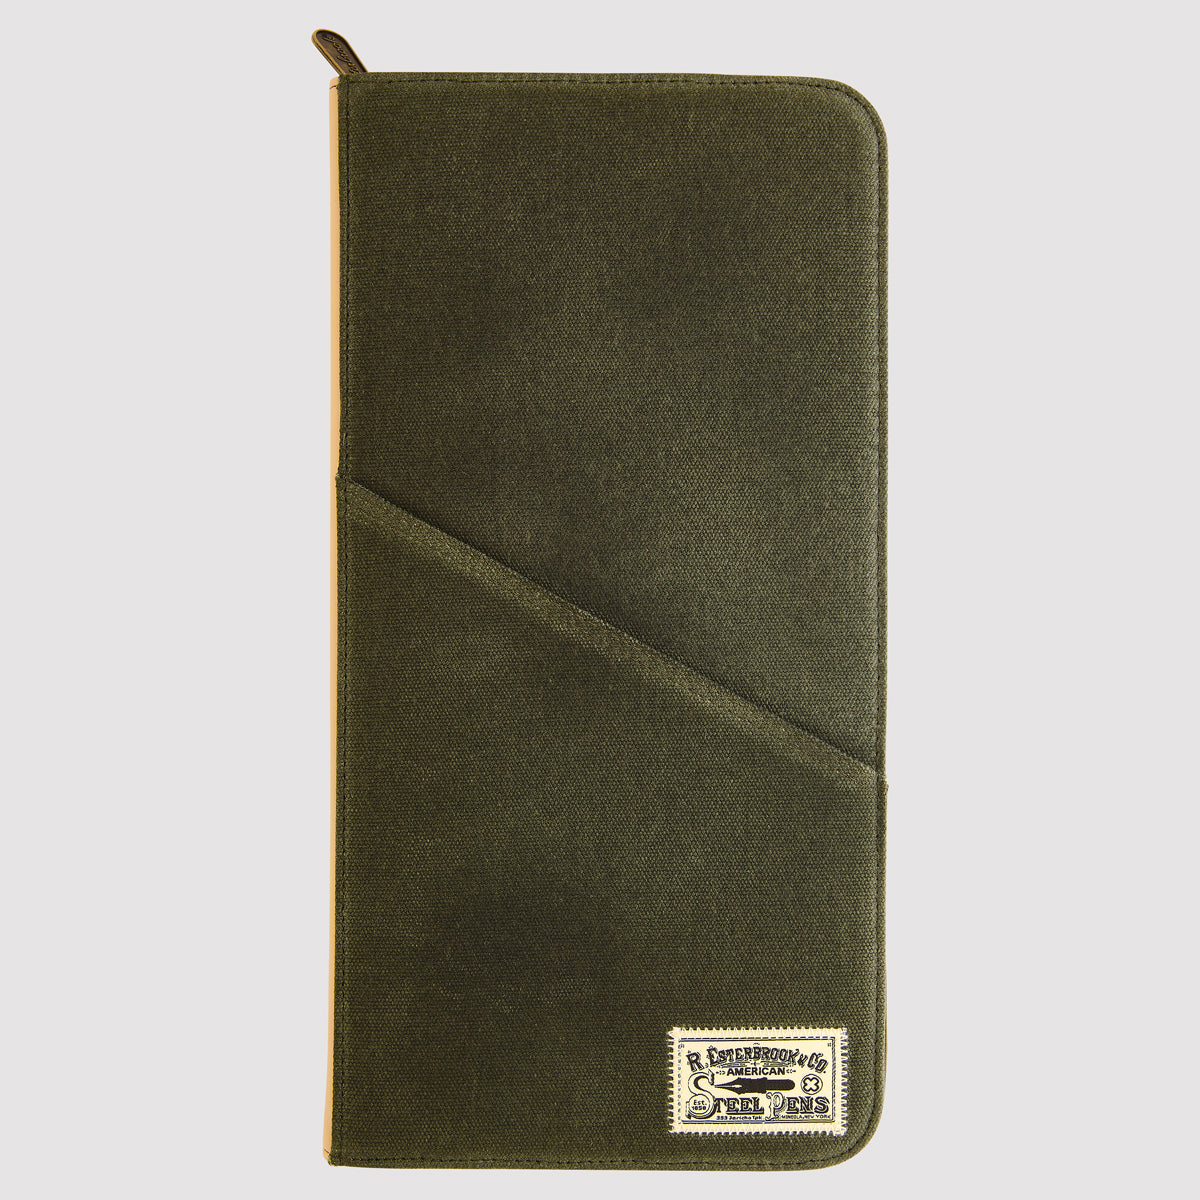 Esterbrook 40 pc zipper pen case - Army Green